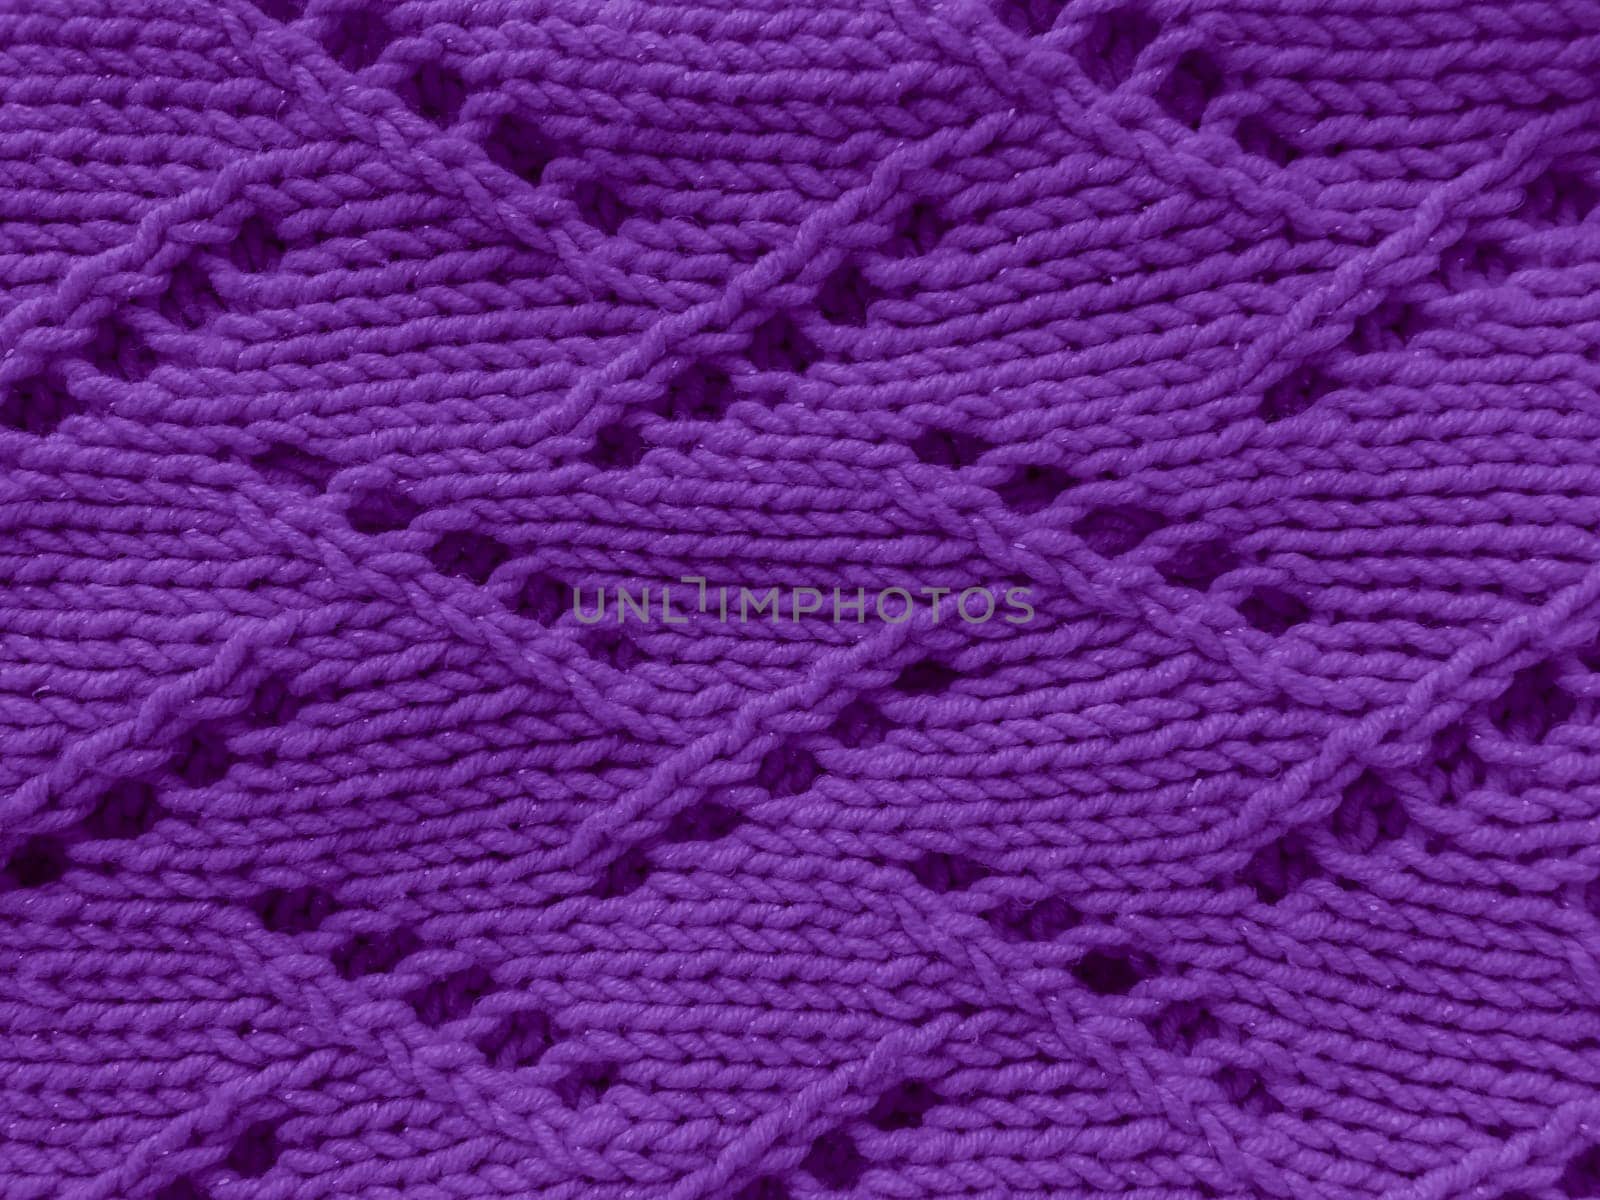 Knitting Texture. Winter Woven Sweater. Handmade Fiber Textile. Knitted Background. Scandinavian Cotton Wallpaper. Organic Soft Thread. Abstract Jacquard Blanket. Knitted Texture.